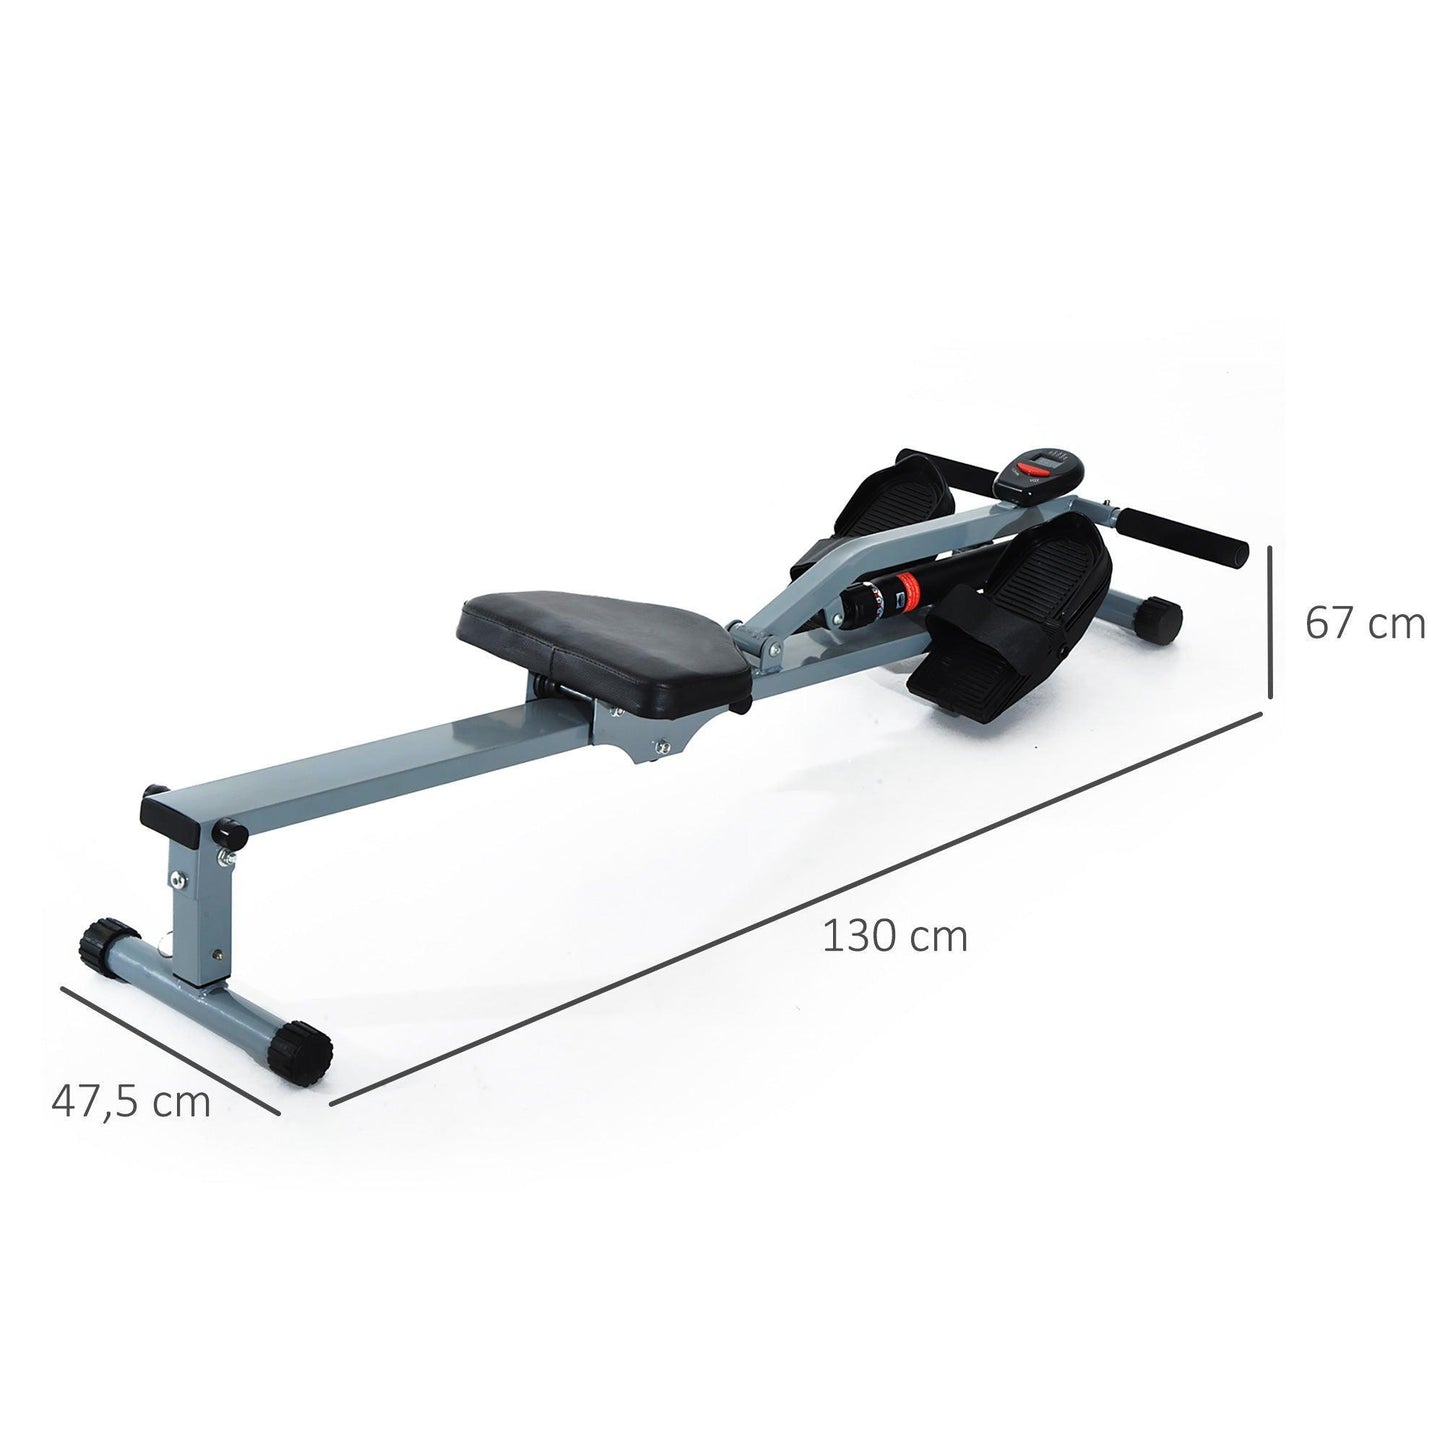 HOMCOM Rowing Machine: Easy Monitor Included - ALL4U RETAILER LTD